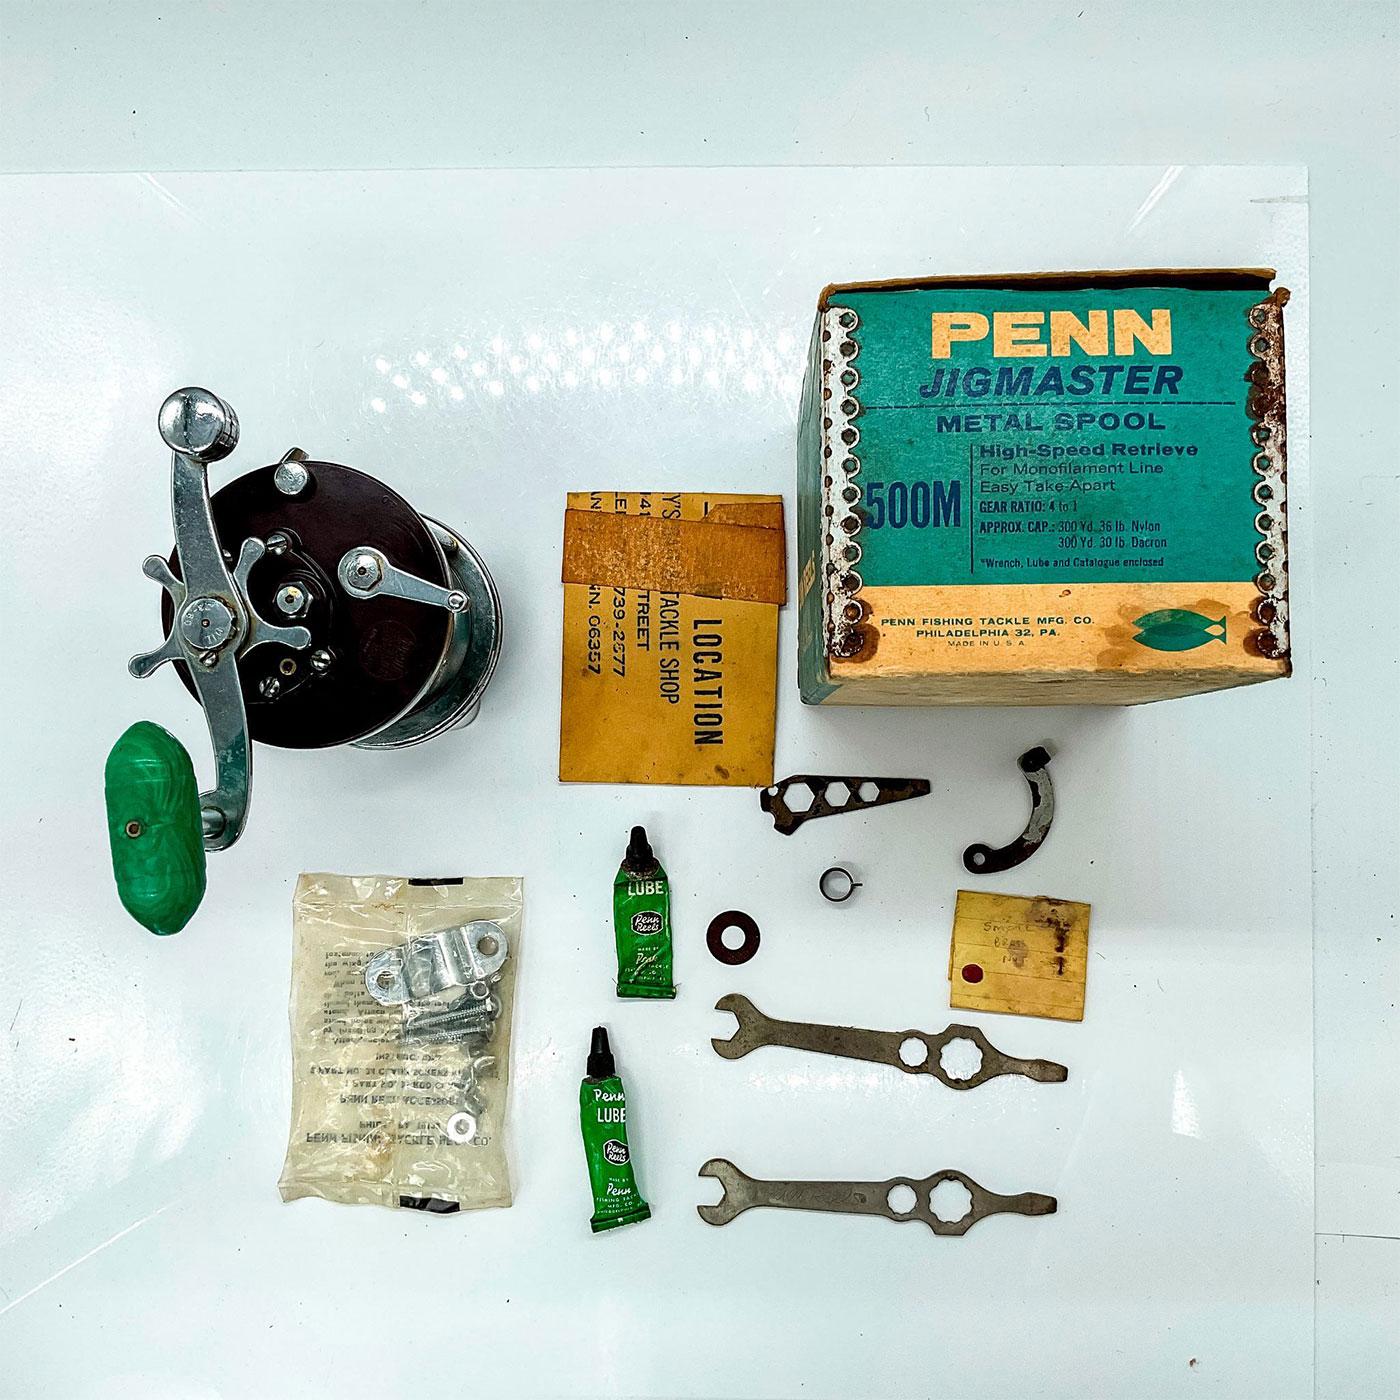 Penn Jigmaster No.500 Made In Phila.PA USA Penn Fishing Tackle MFG.CO. 